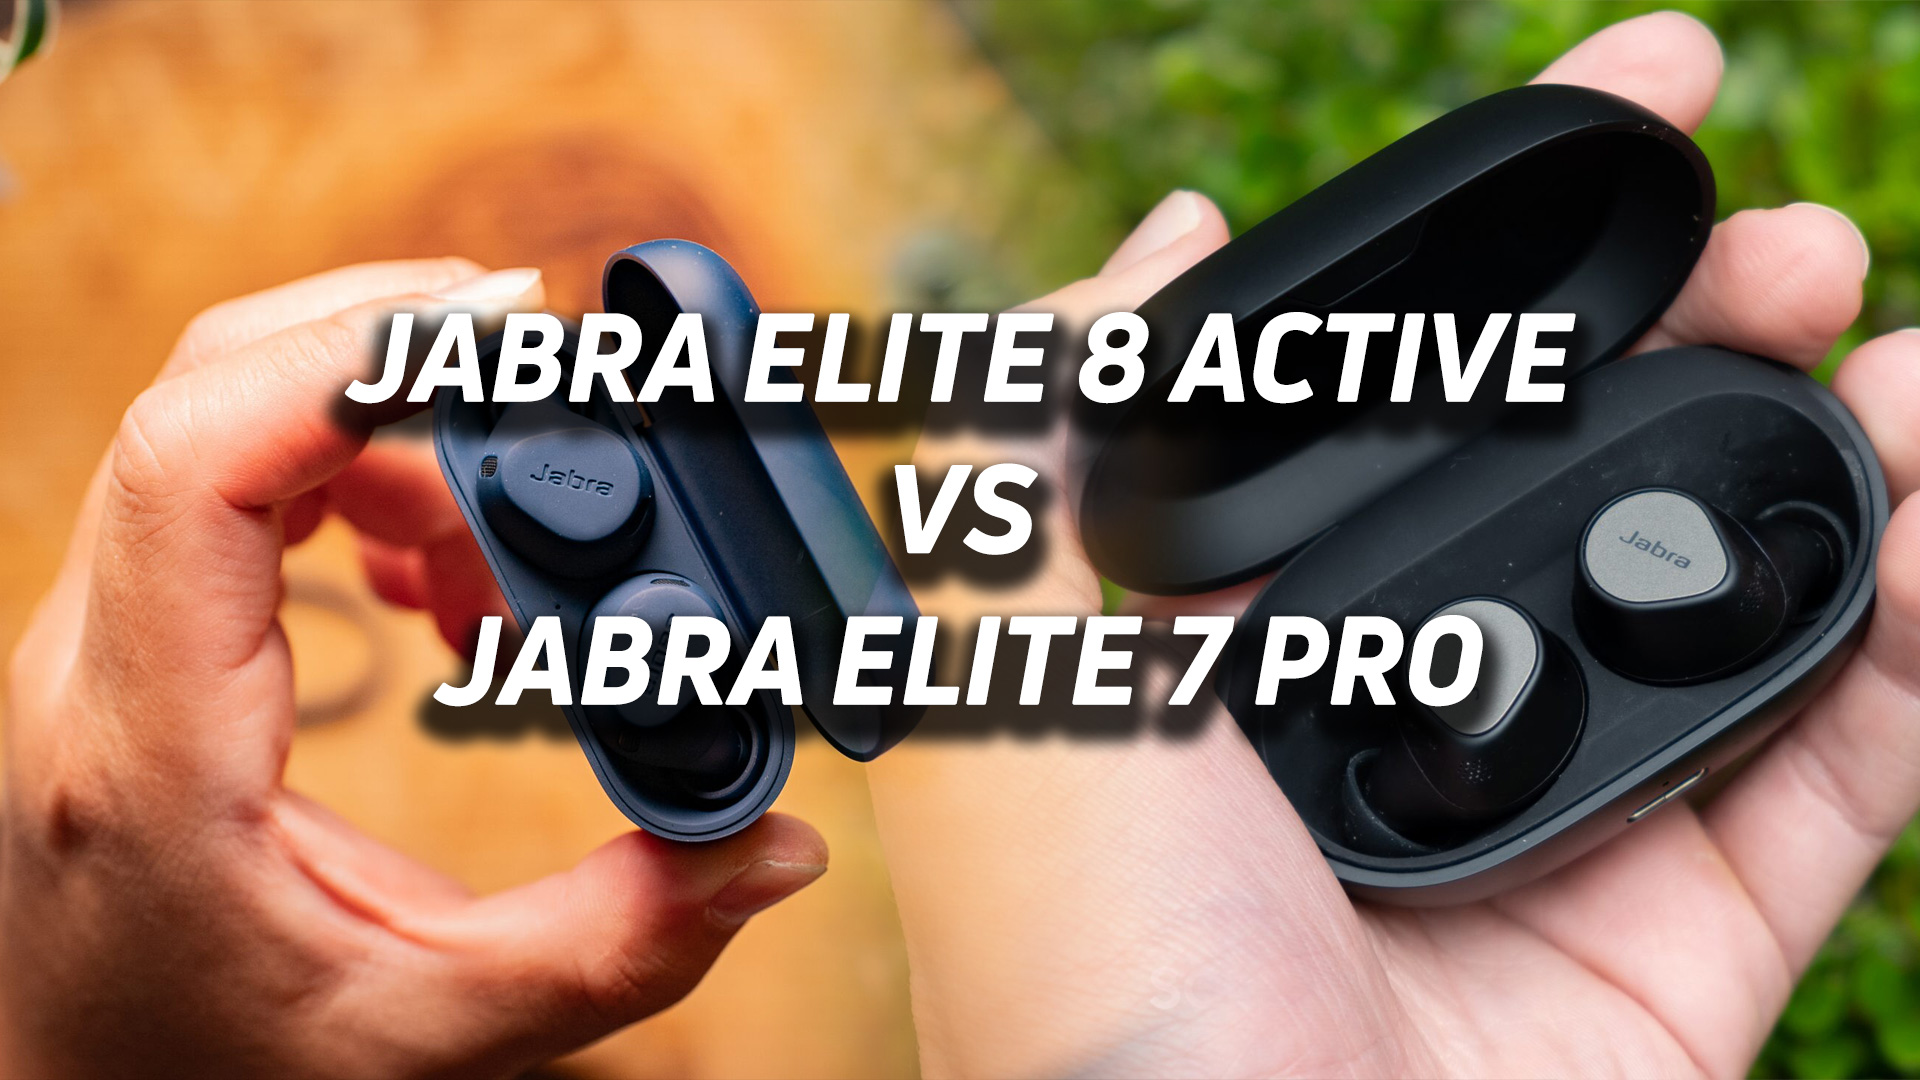 Jabra Elite 7 Pro vs Jabra Elite 7 Active: Which should you buy?